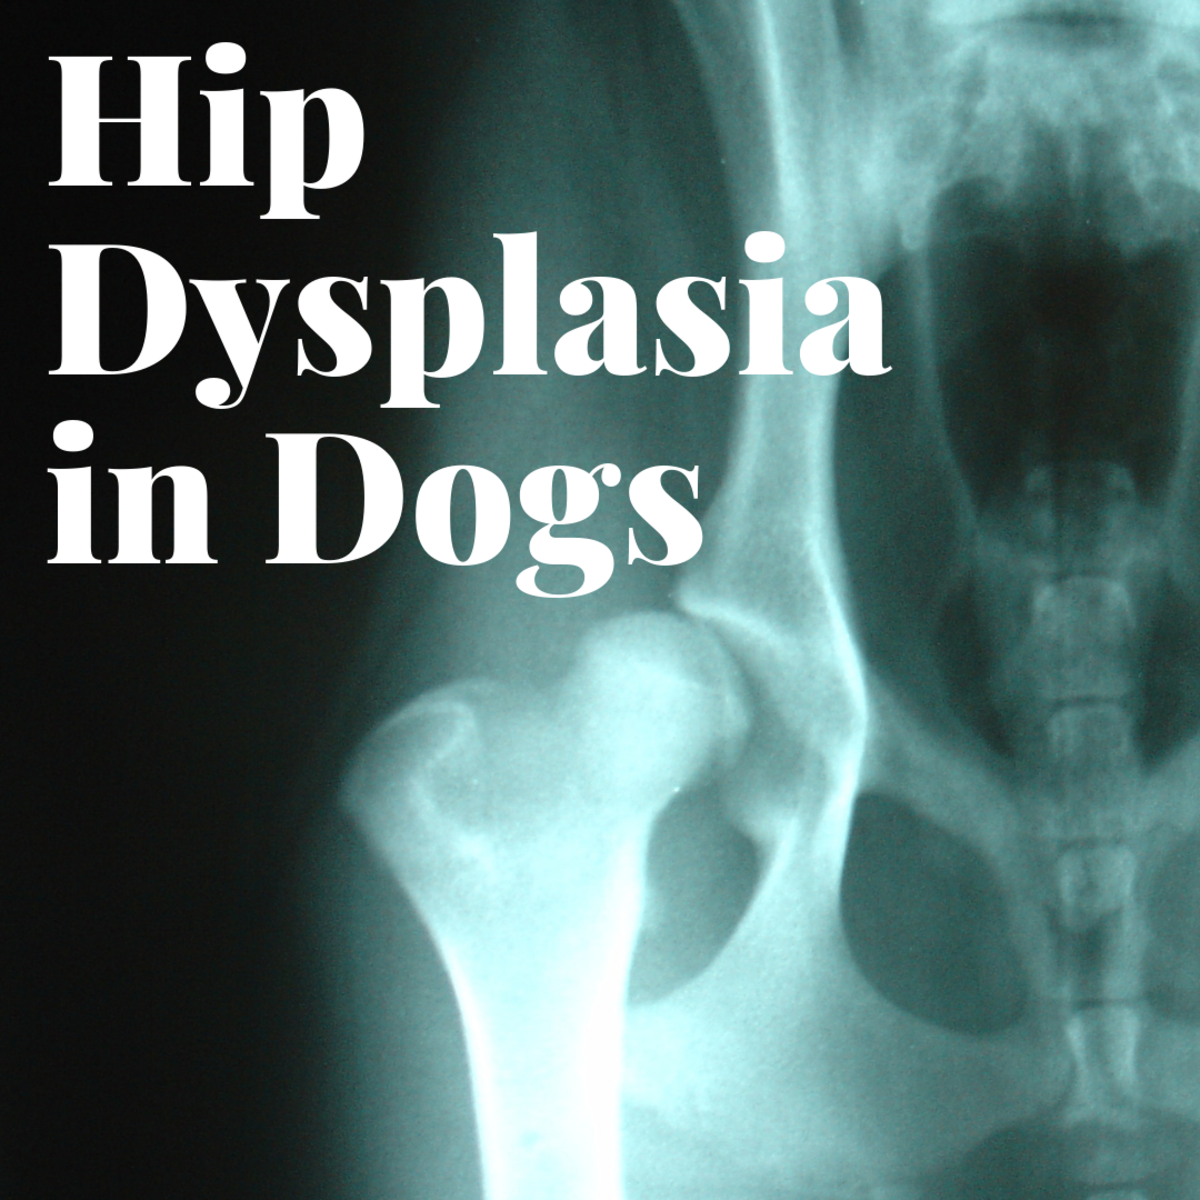 Alternative Therapies for Hip Dysplasia